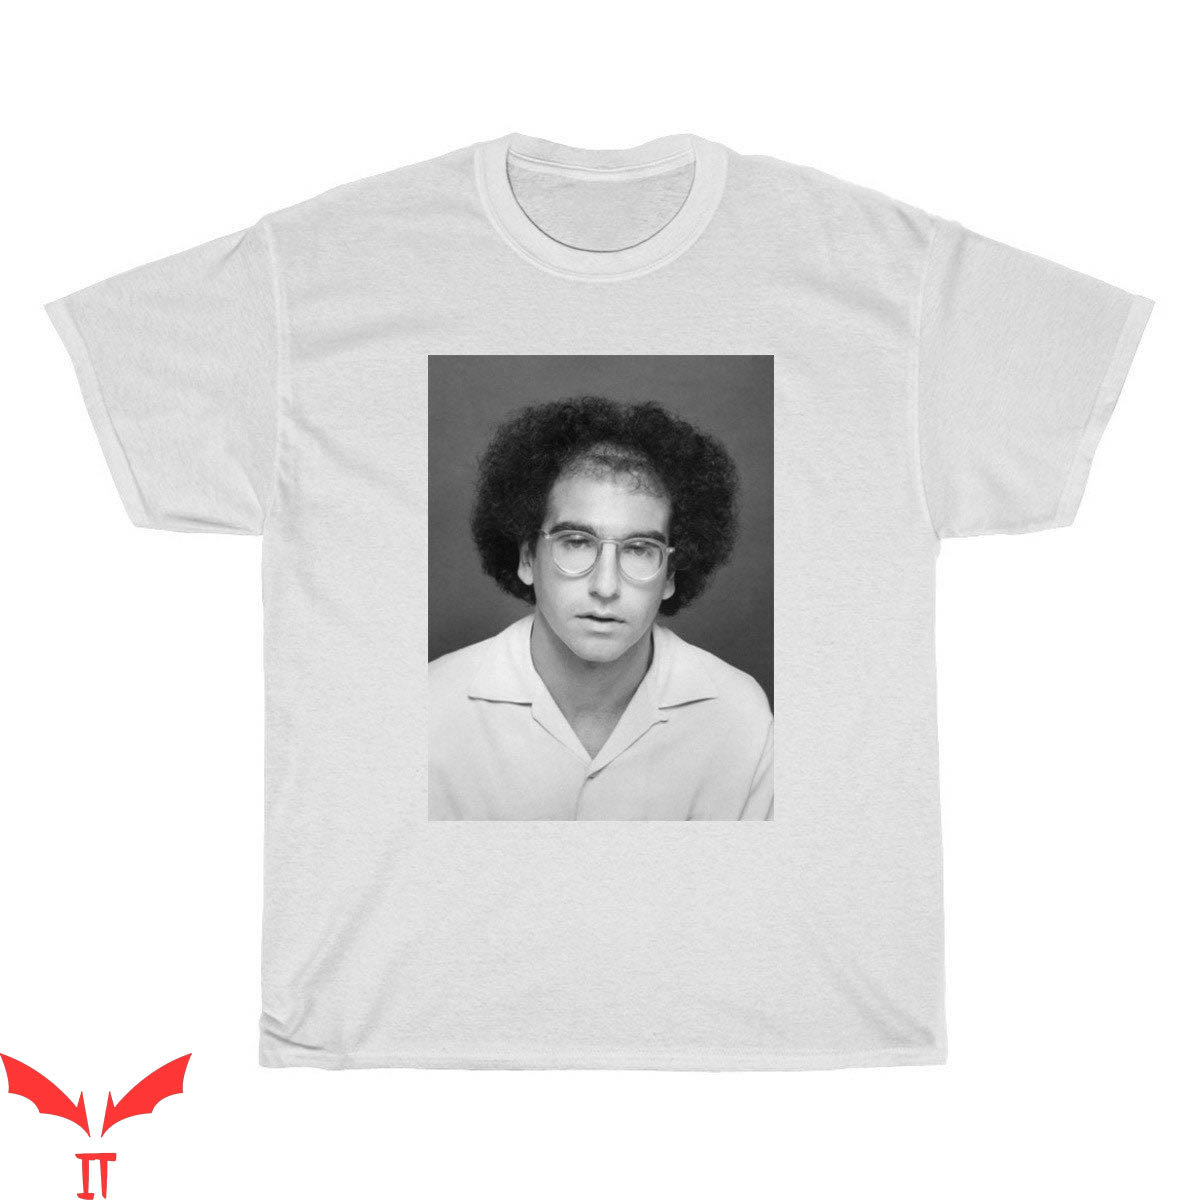 Larry David T-Shirt YoungLarry David T-Shirt